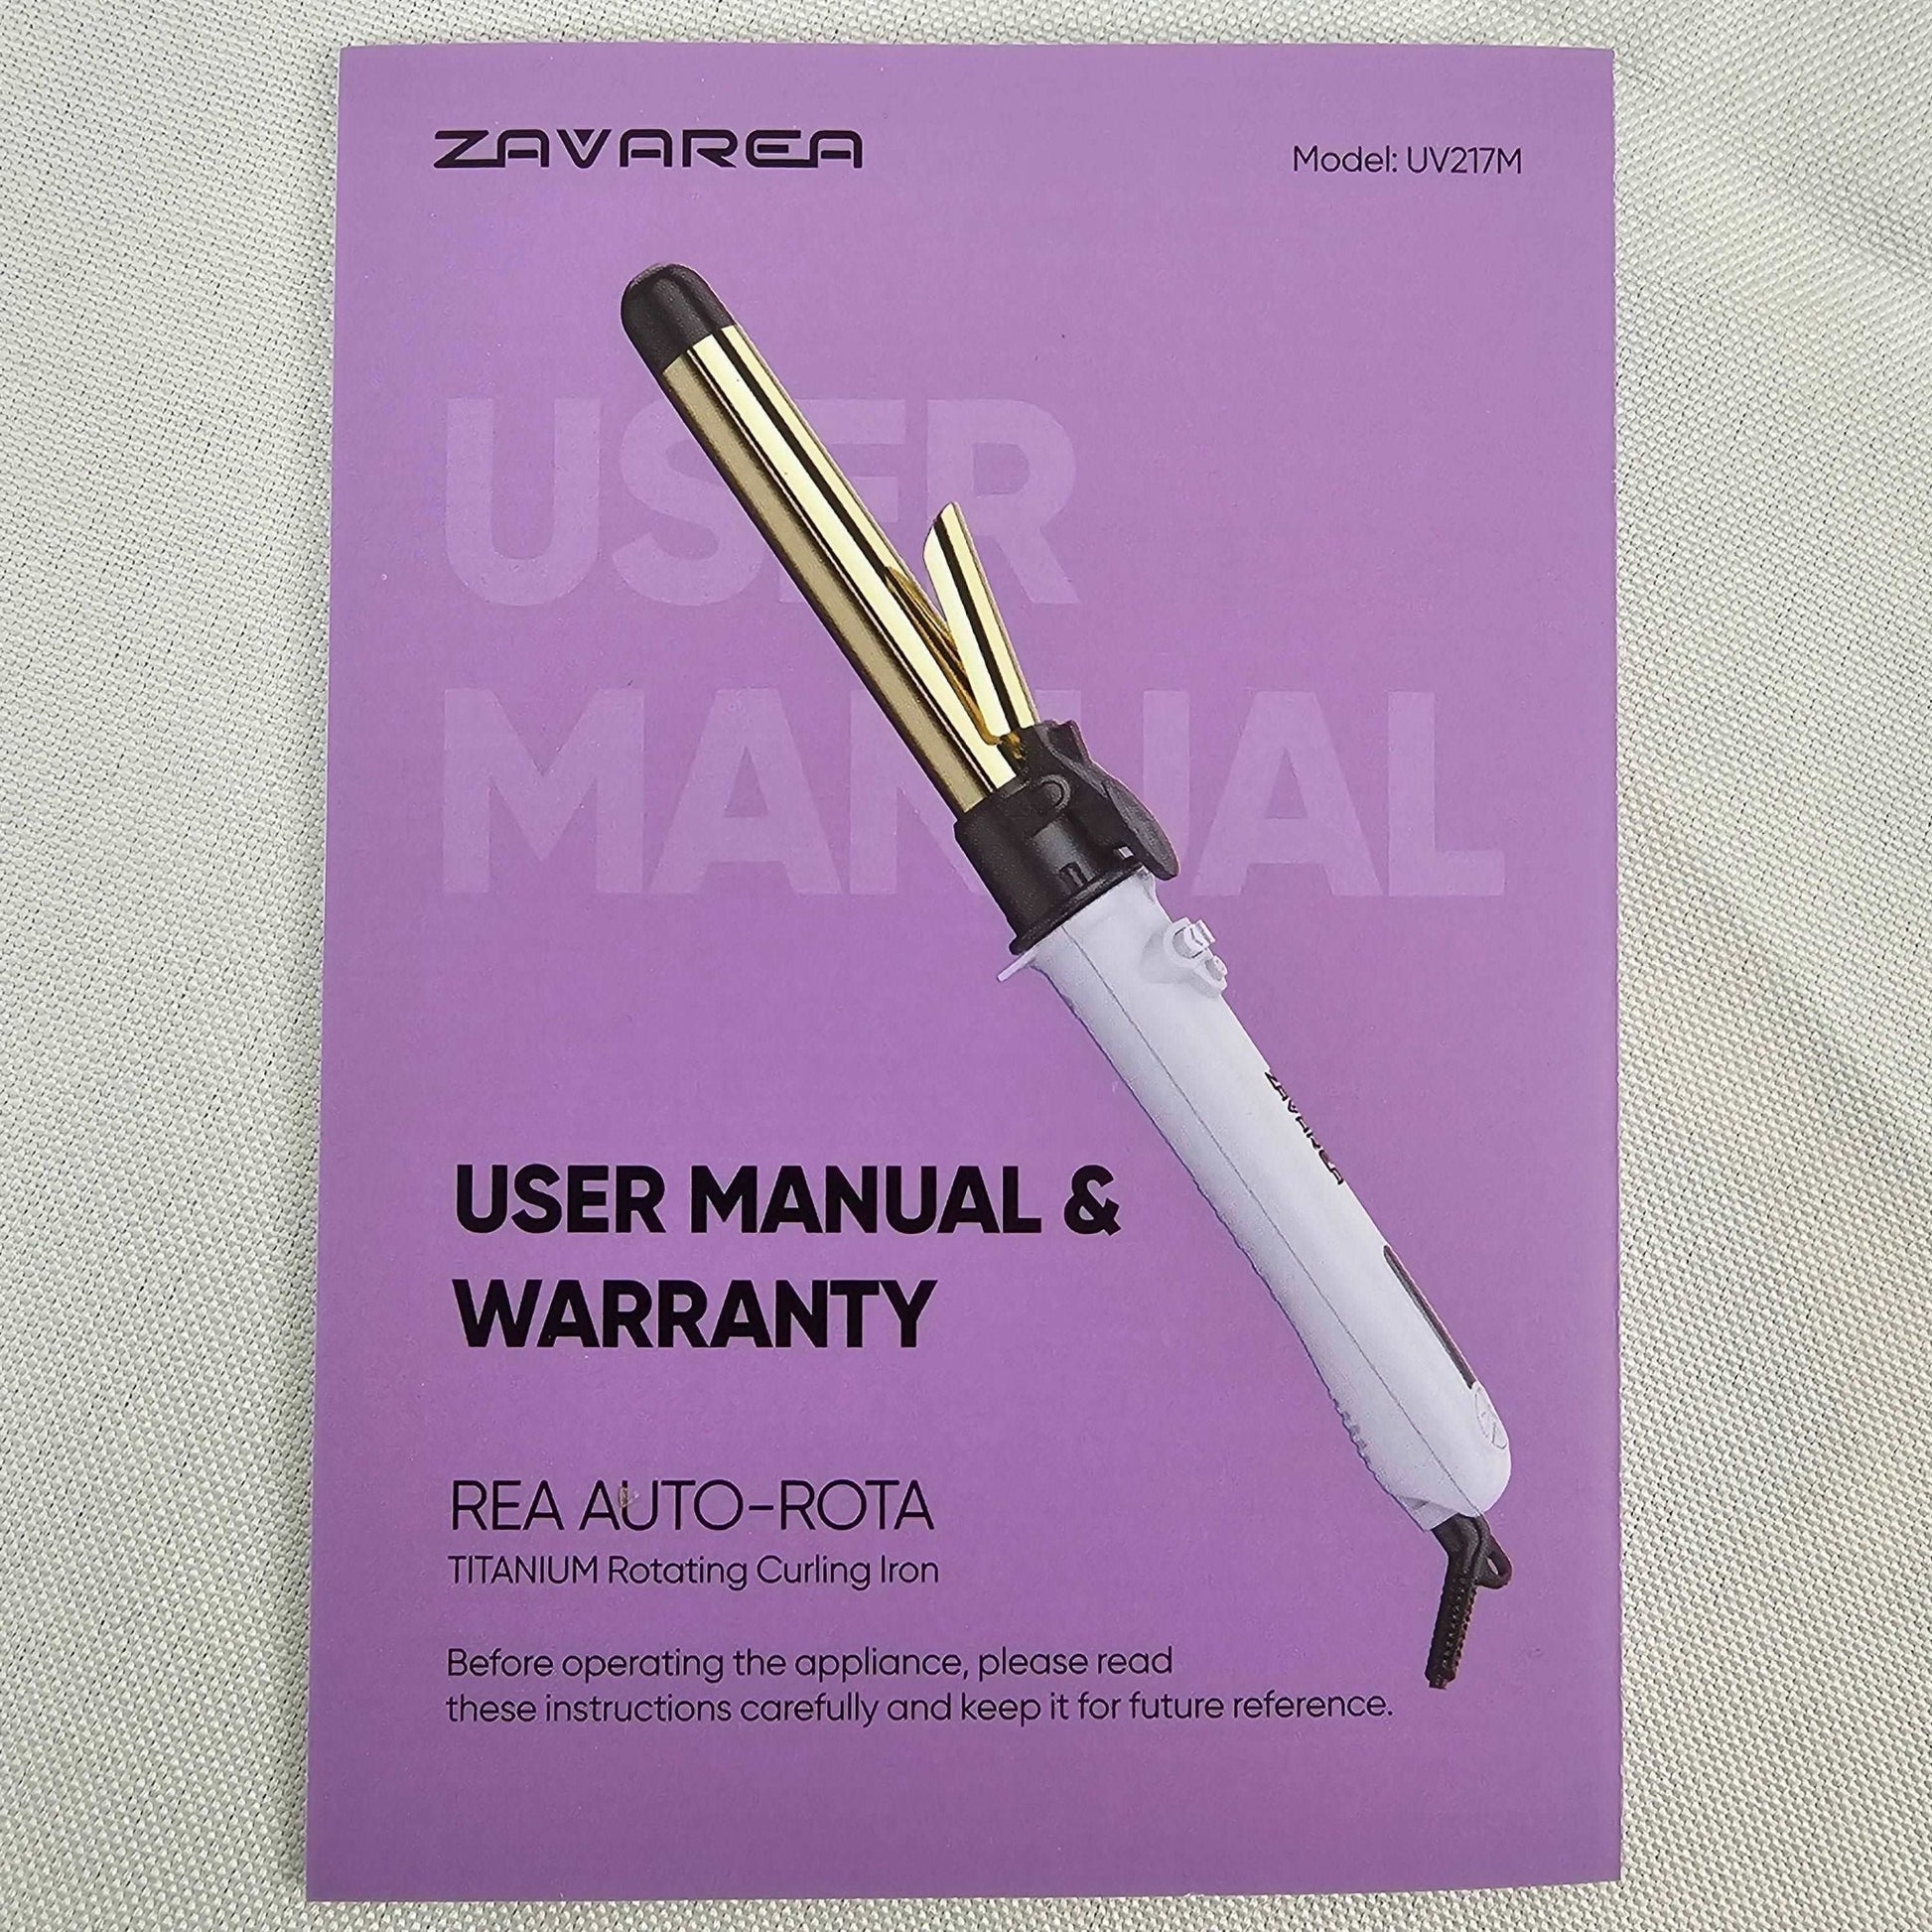 1 Inch Titanium Automatic Rotating Curling Iron Zavarea REA Auto-Rota UV217M - DQ Distribution